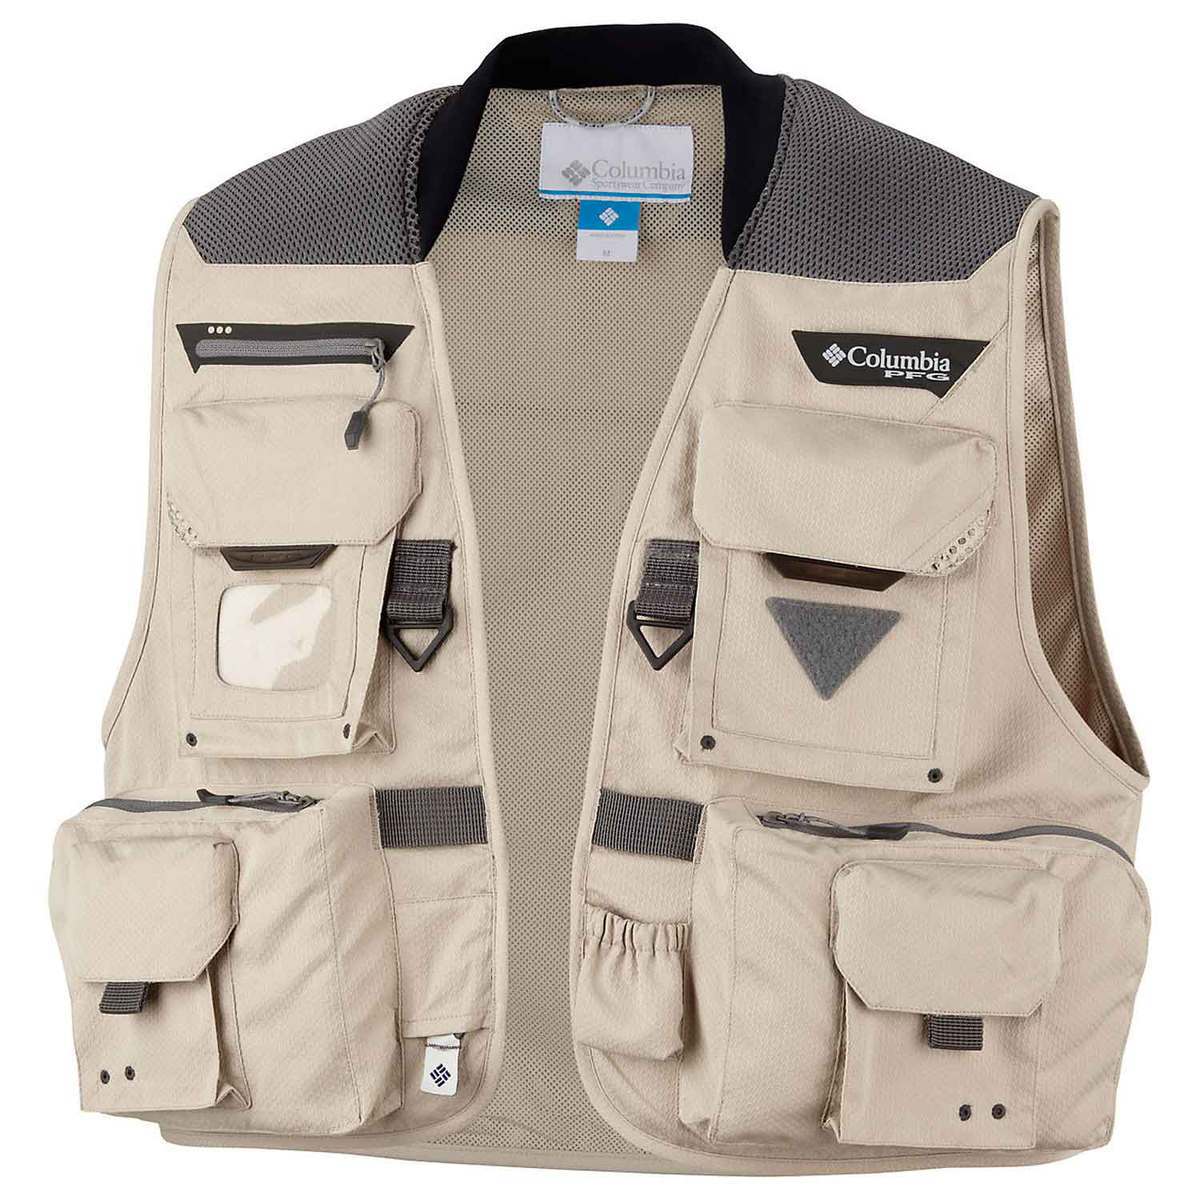 COLUMBIA SPORTSWEAR - Men's Cargo Fishing Vest - Size X-Large - XL